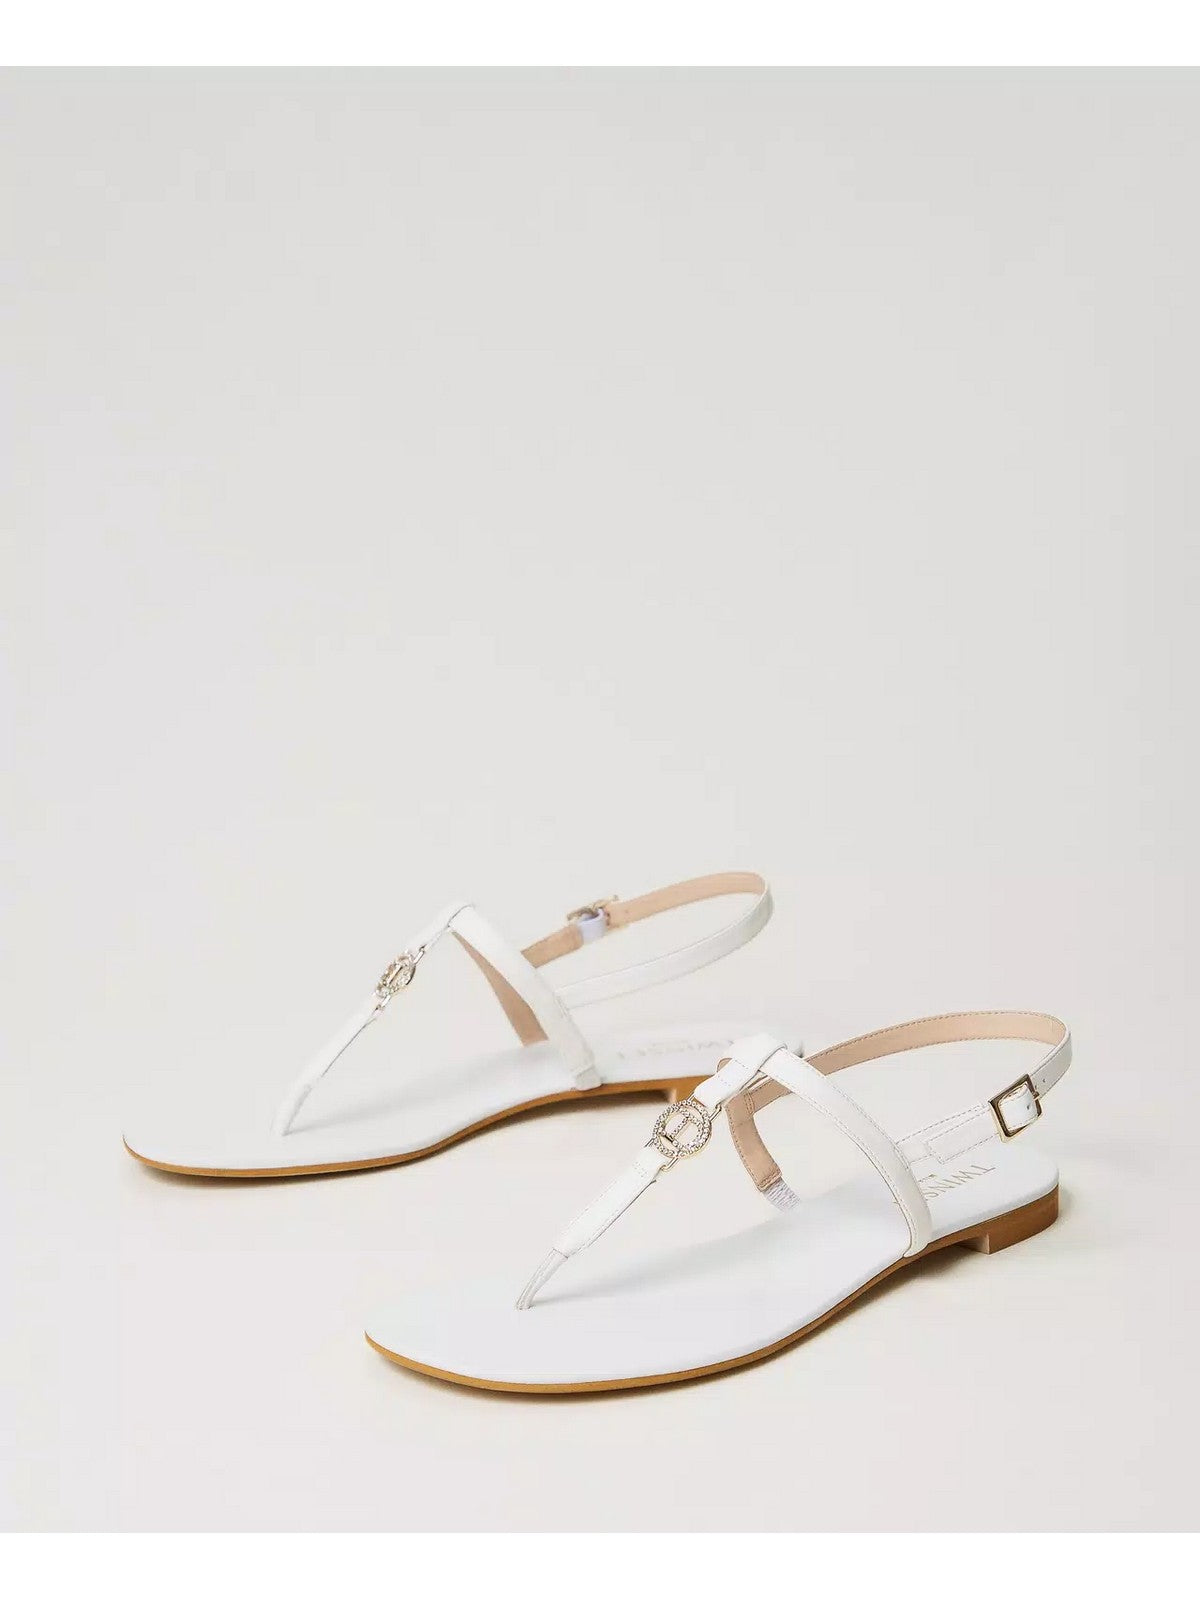 TWINSET Sandalo Donna  241TCT100 00001 Bianco